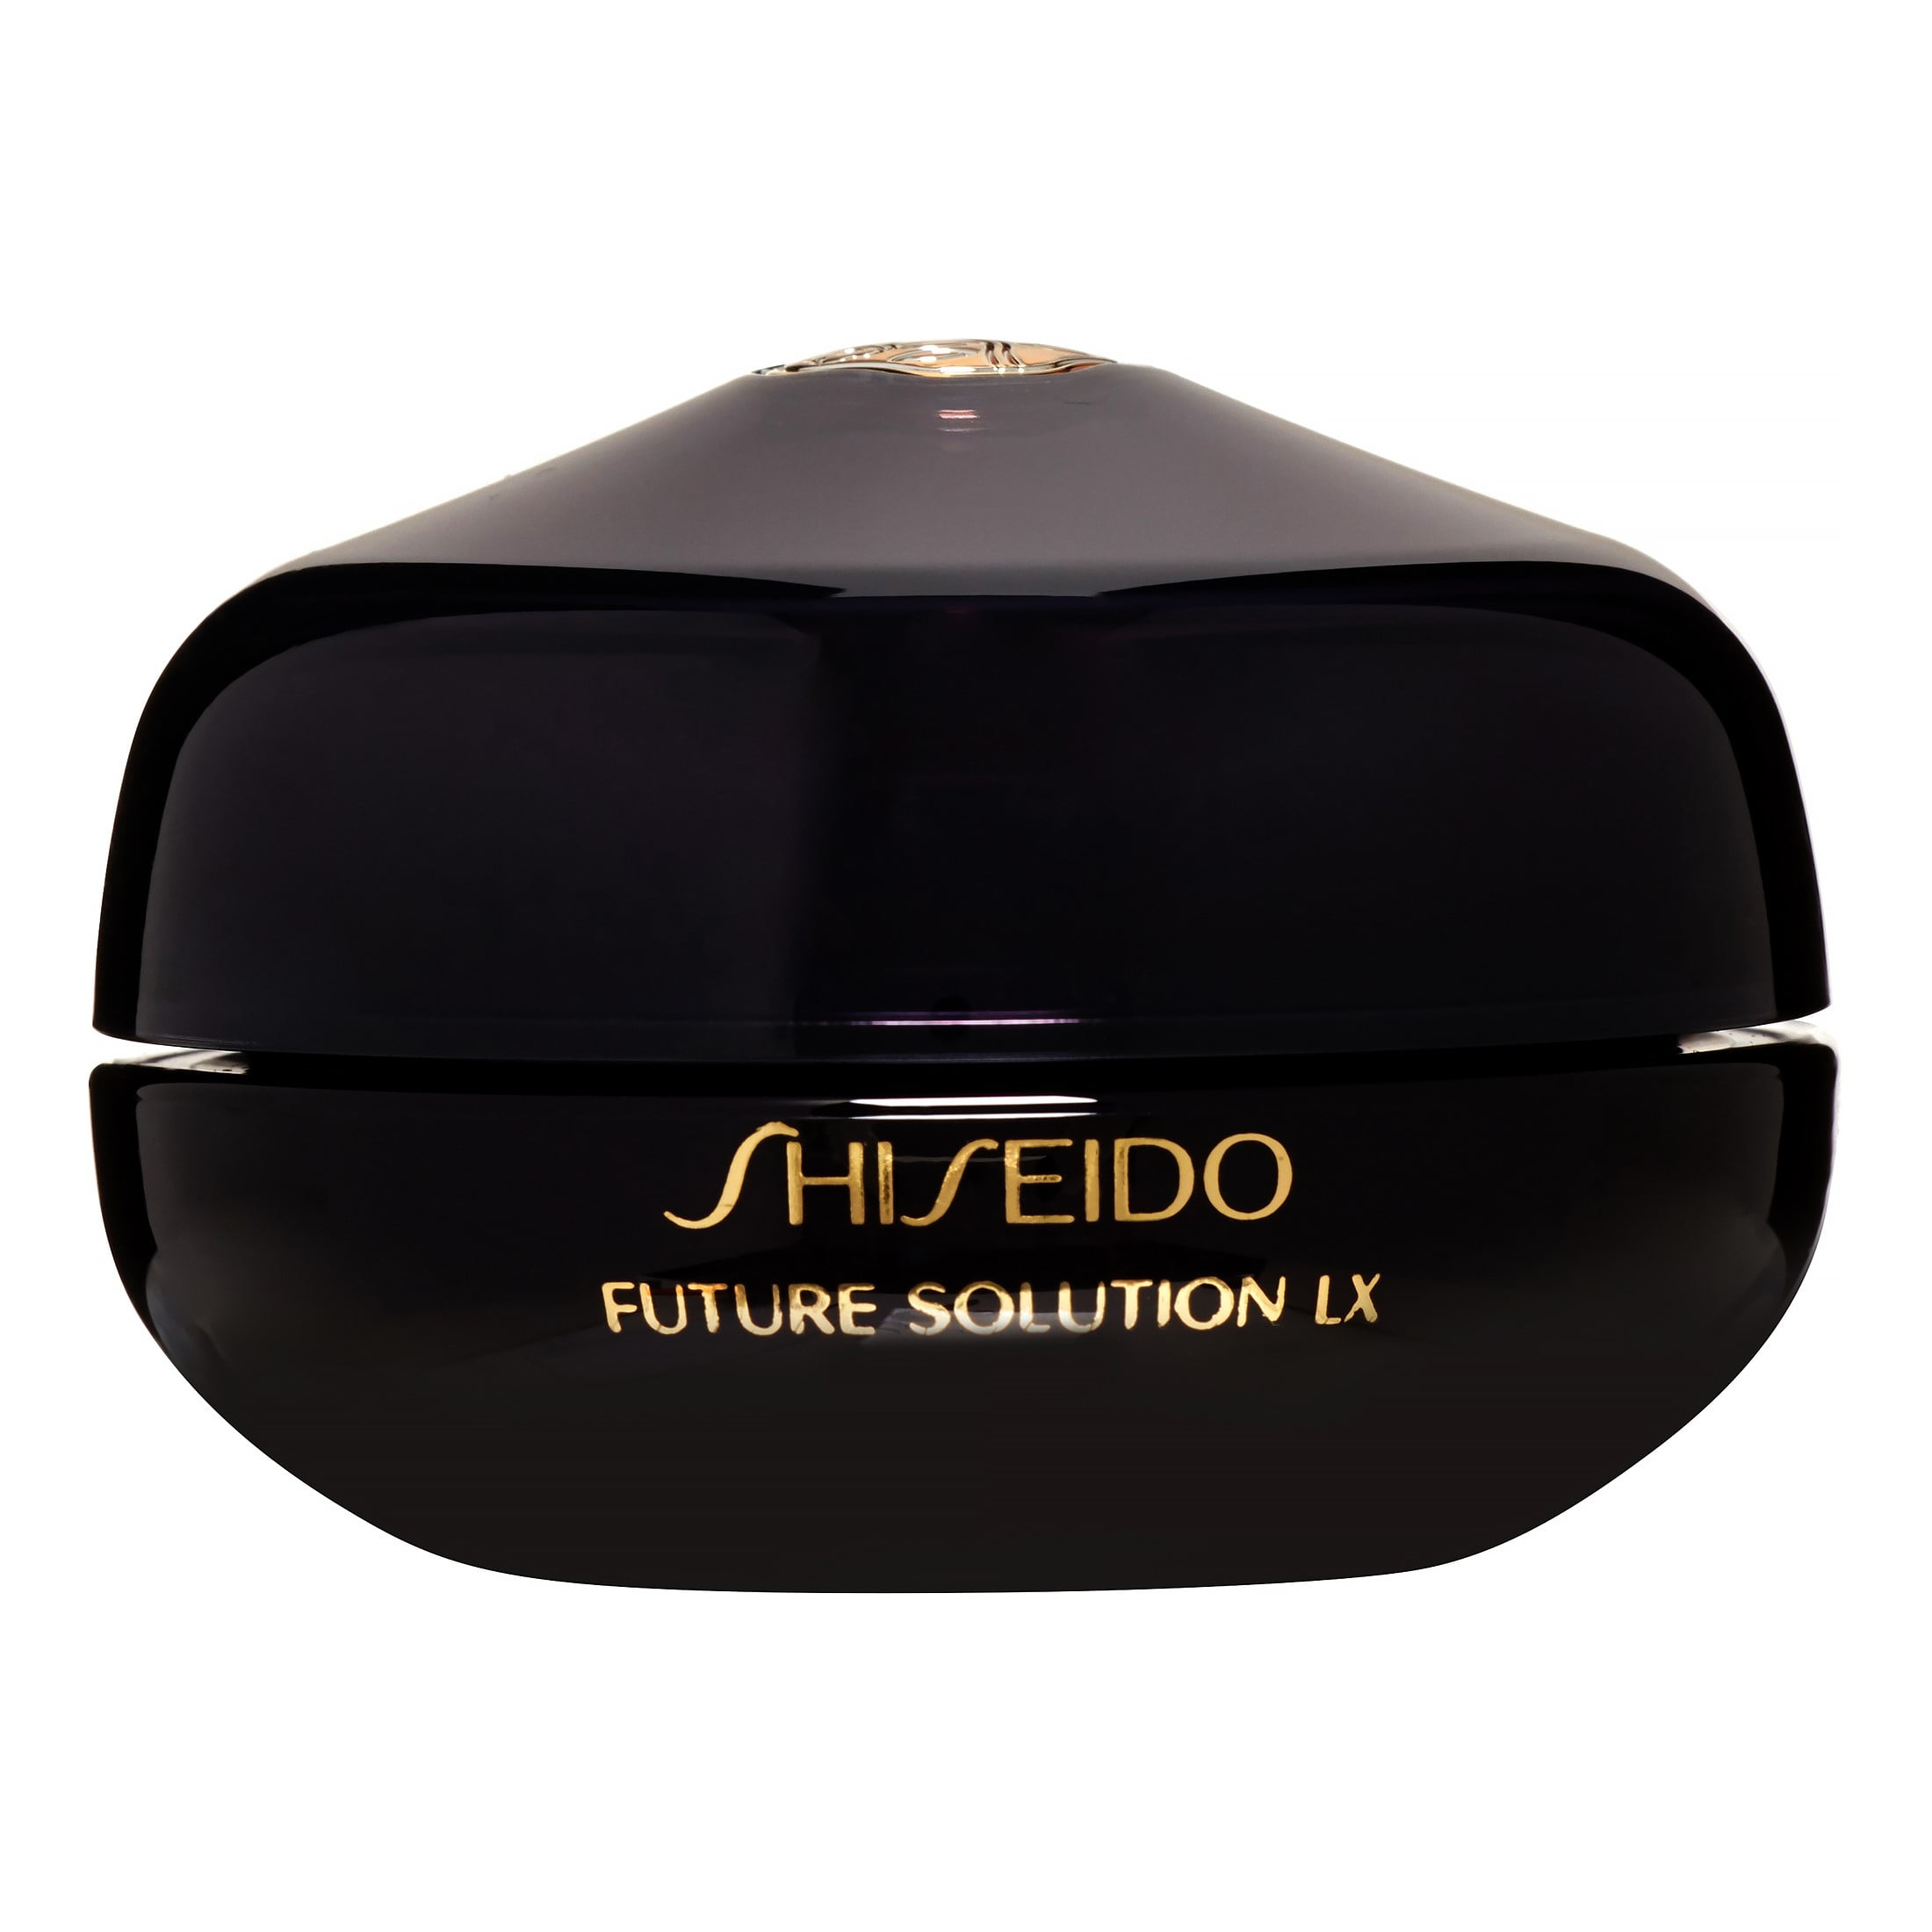 Shiseido Future solution. Shiseido Future solution LX Eye and Lip Contour Regenerating Cream e. Future solution LX. Shiseido Future solution LX ночной крем чье производство.